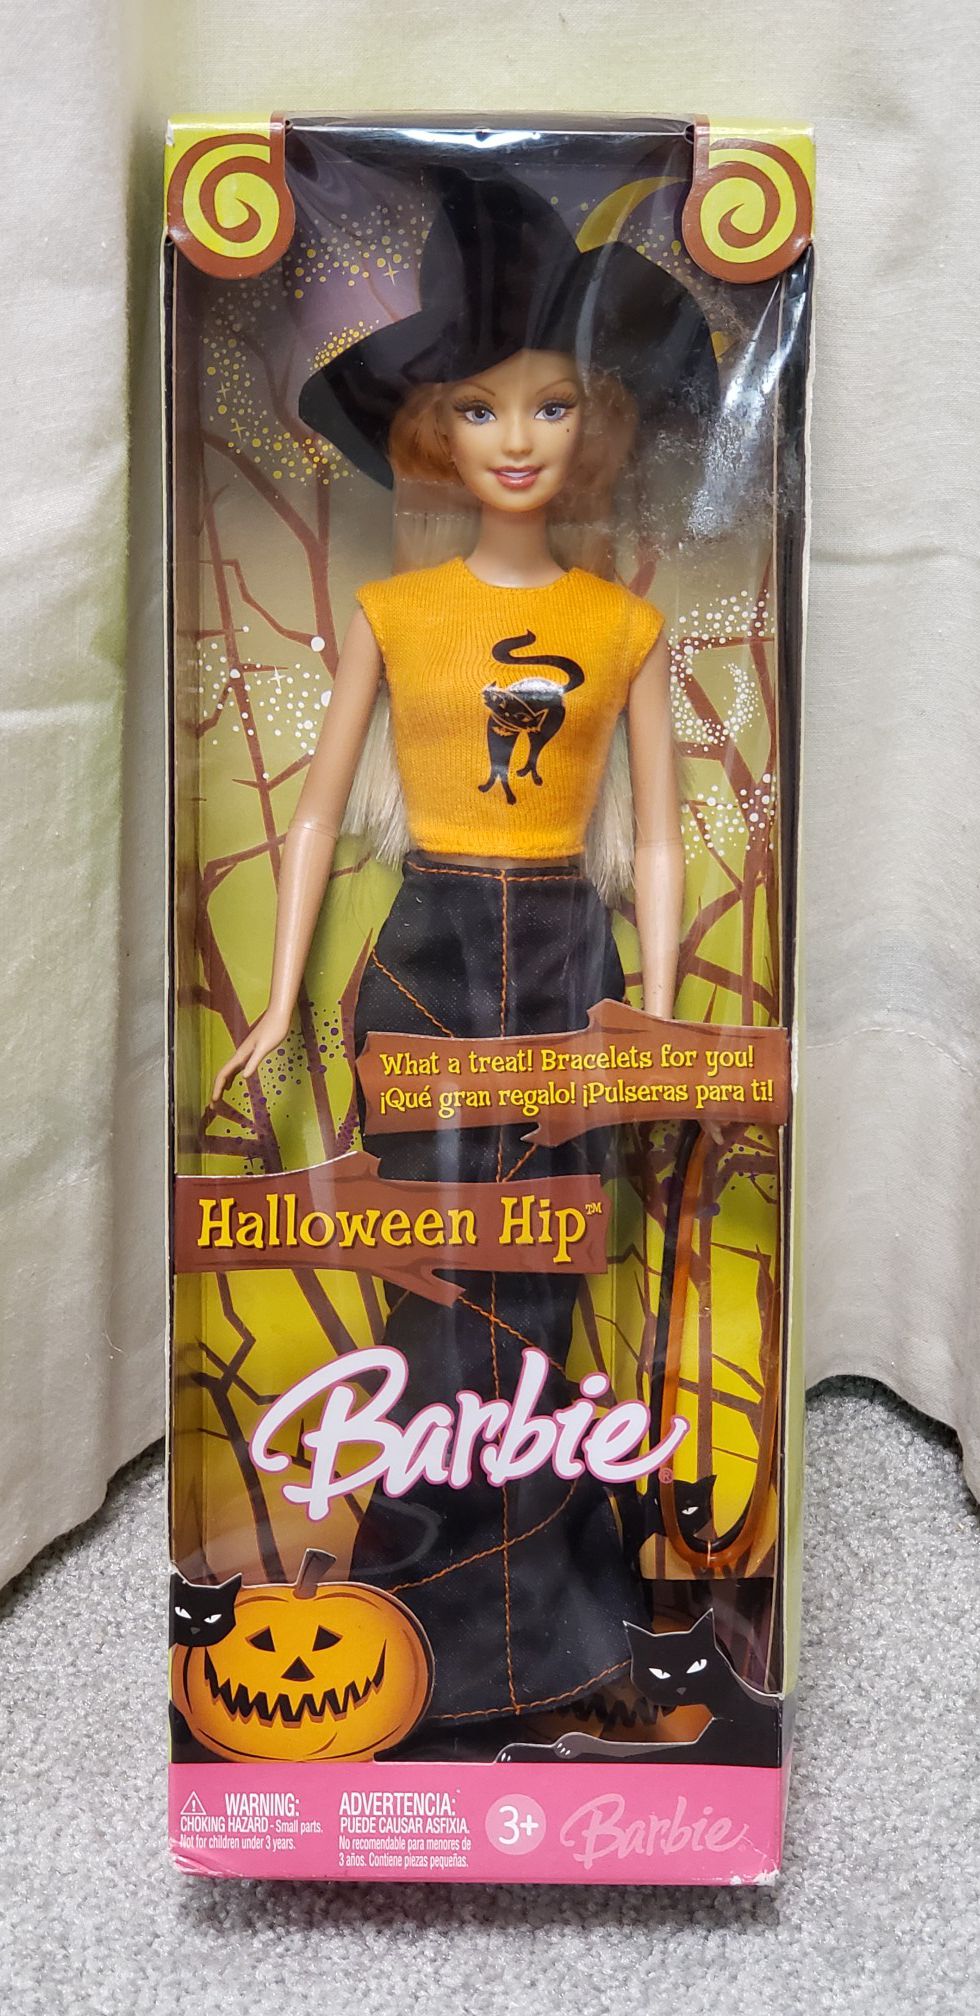 Halloween Hip Barbie Doll!